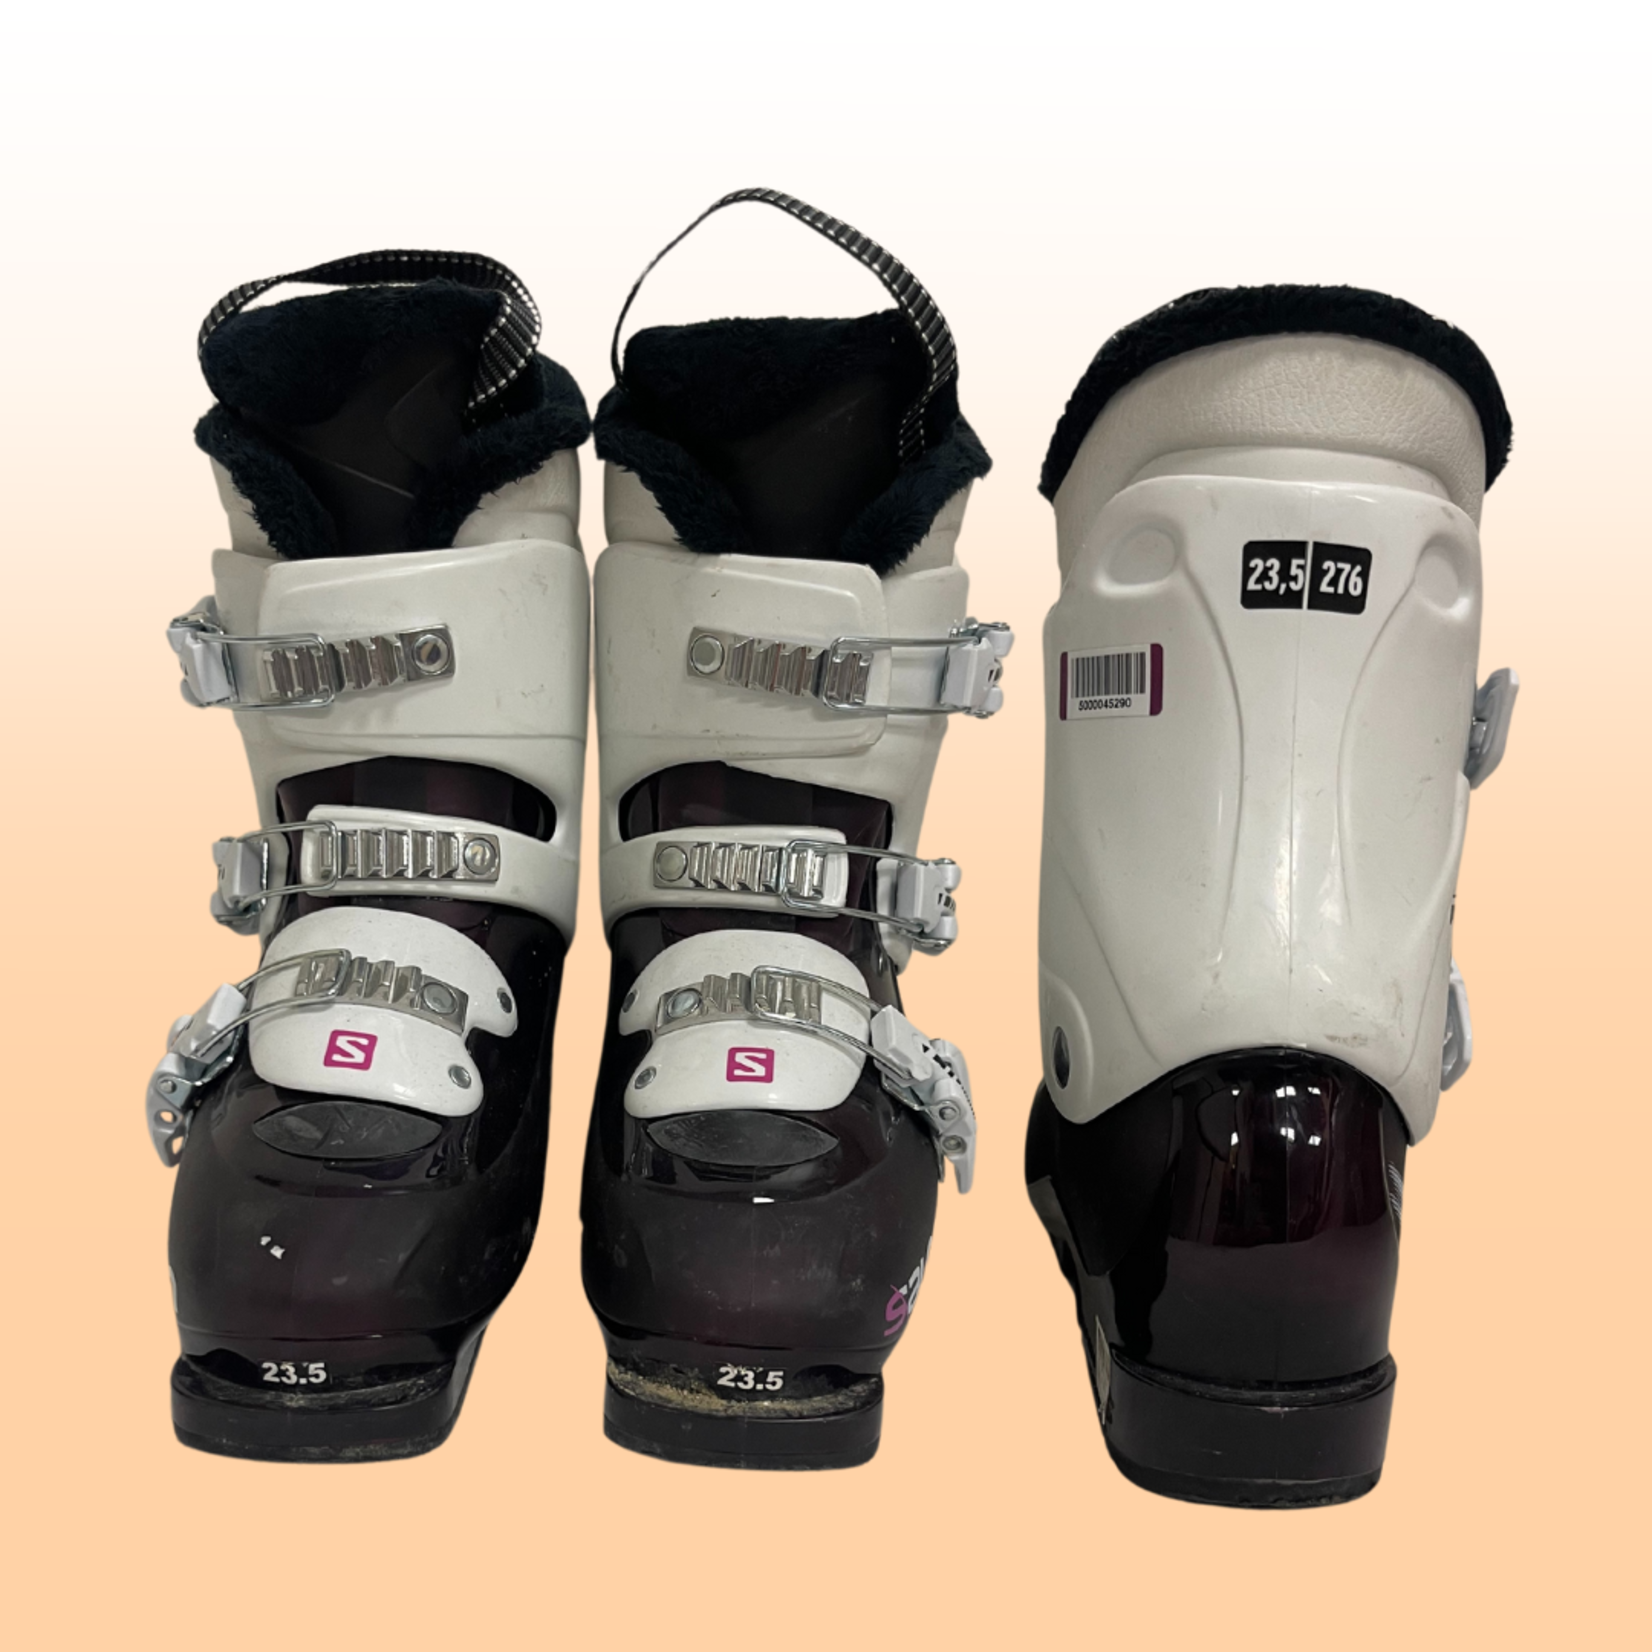 Salomon Salomon T3 Girls Ski Boots, Size 23.5